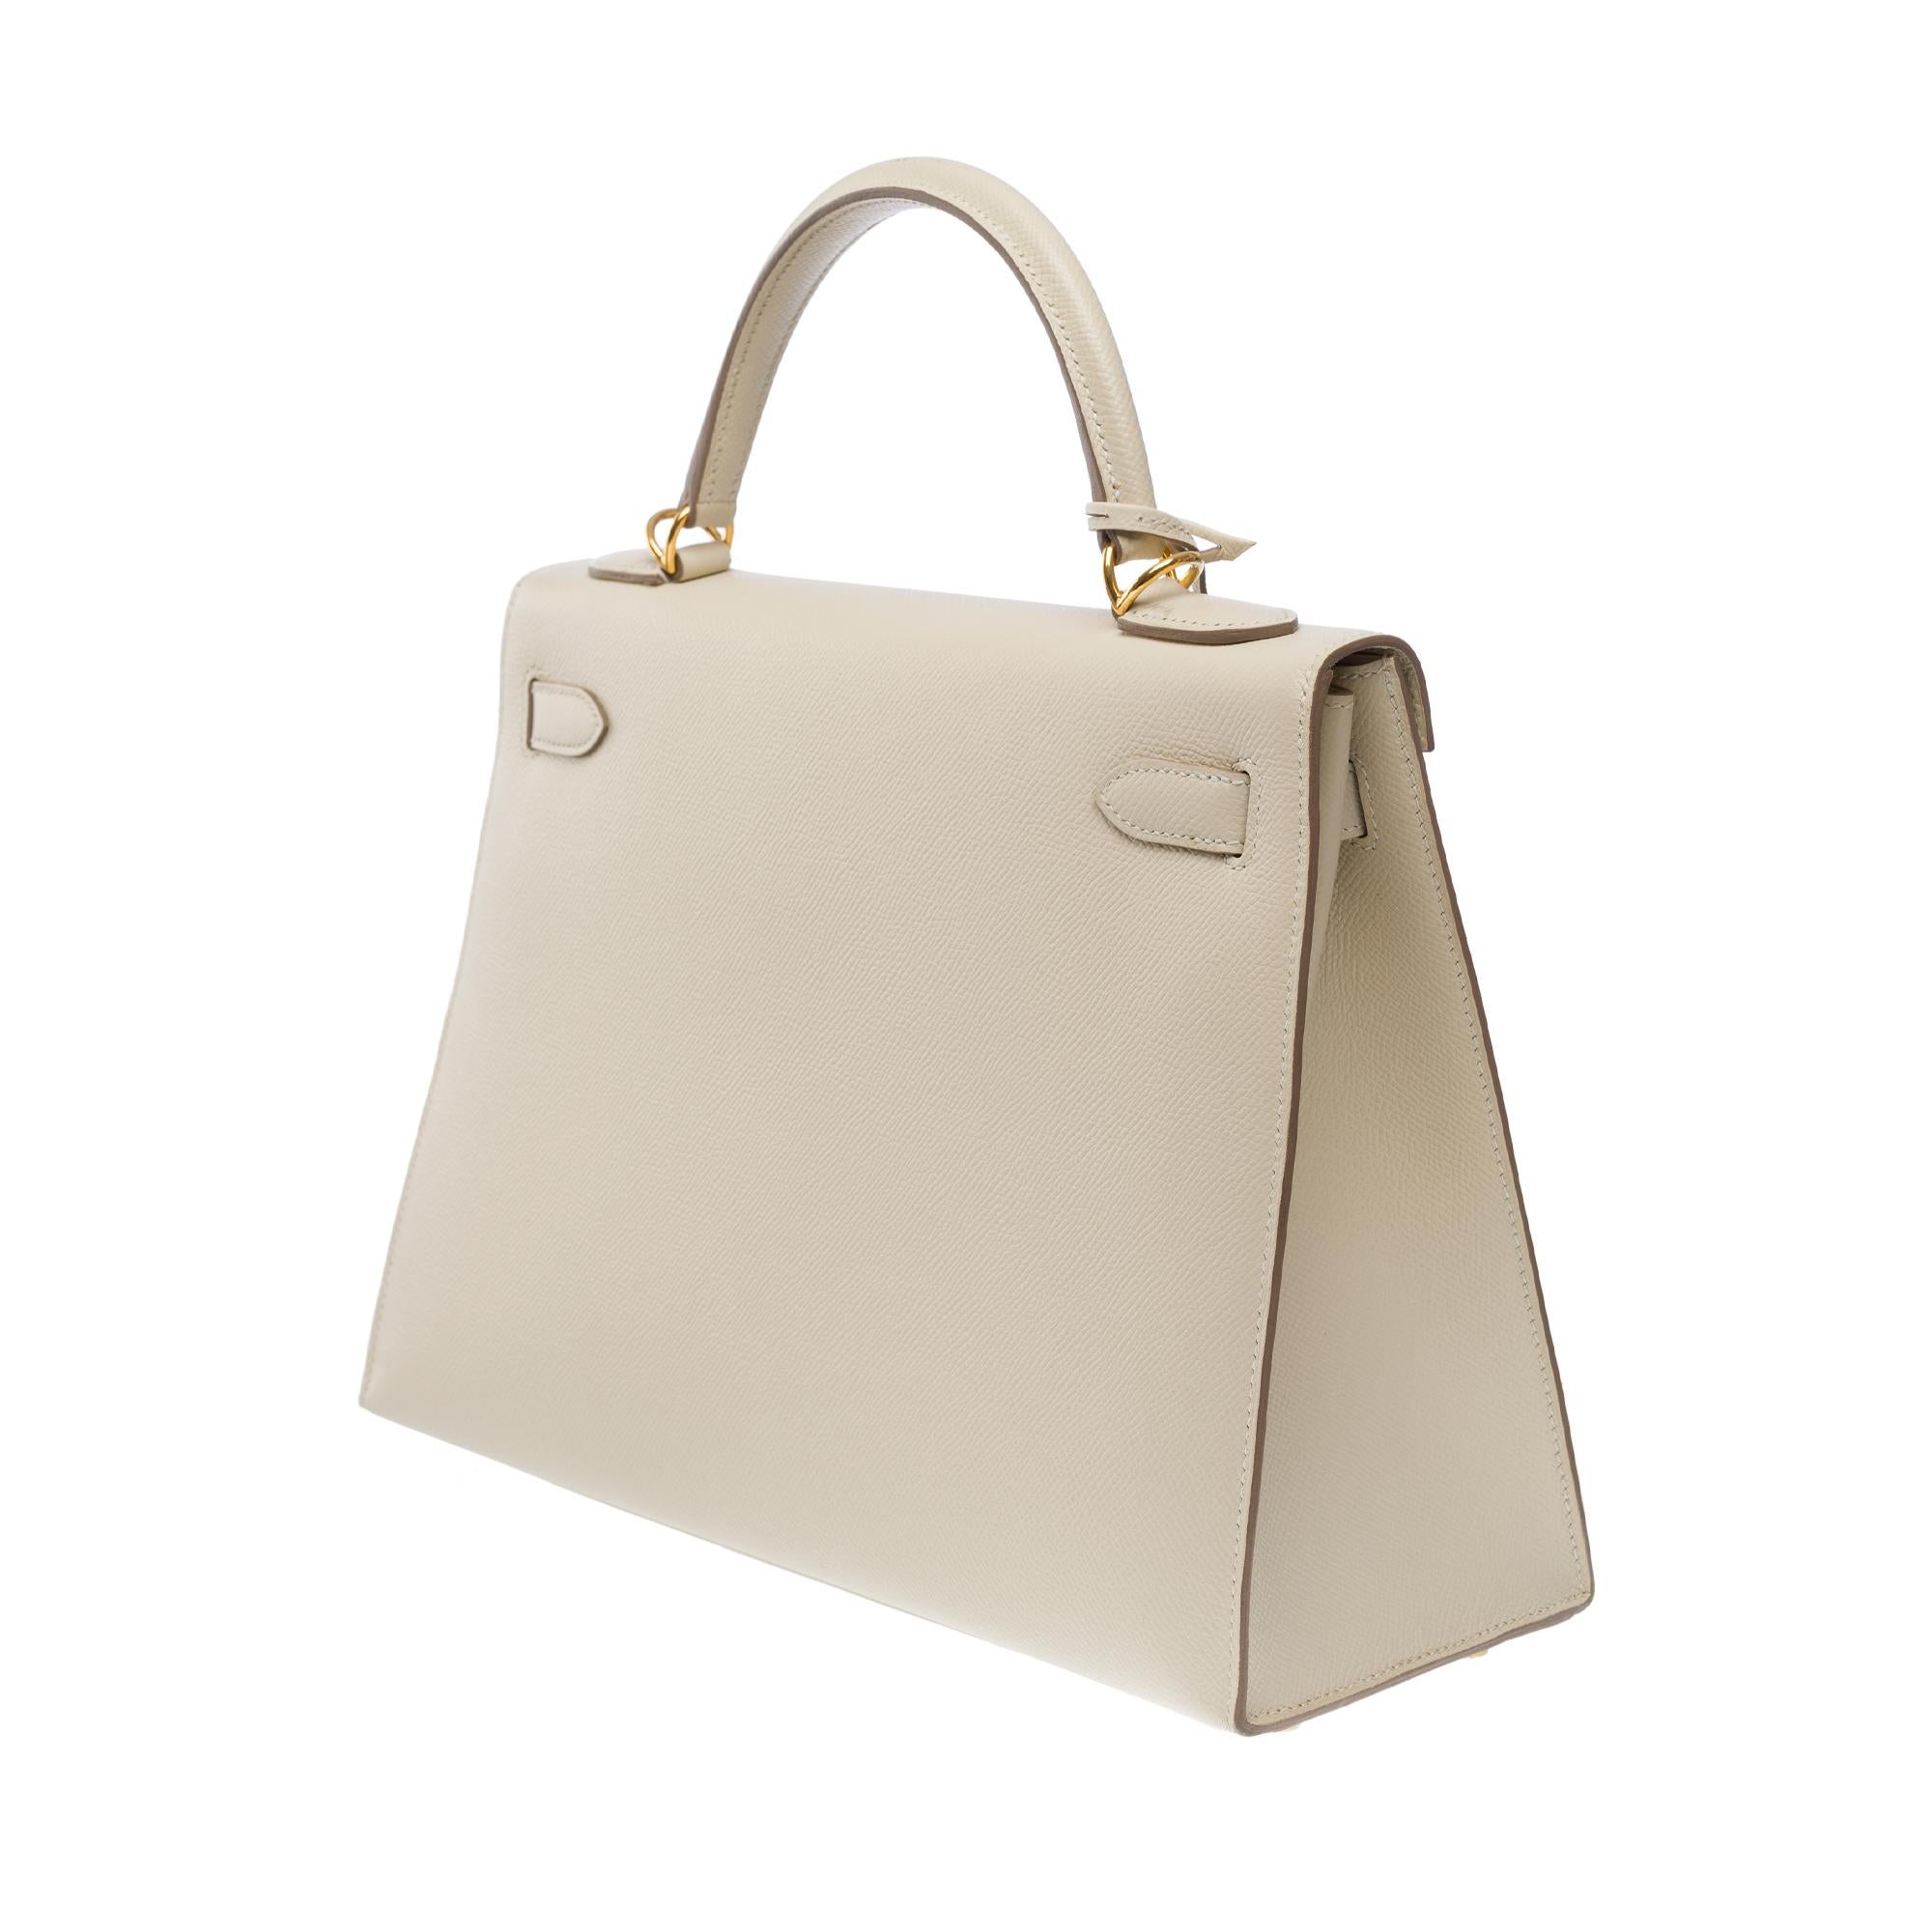 Stunning Hermès Kelly 32 sellier handbag strap in Craie epsom leather, GHW 3